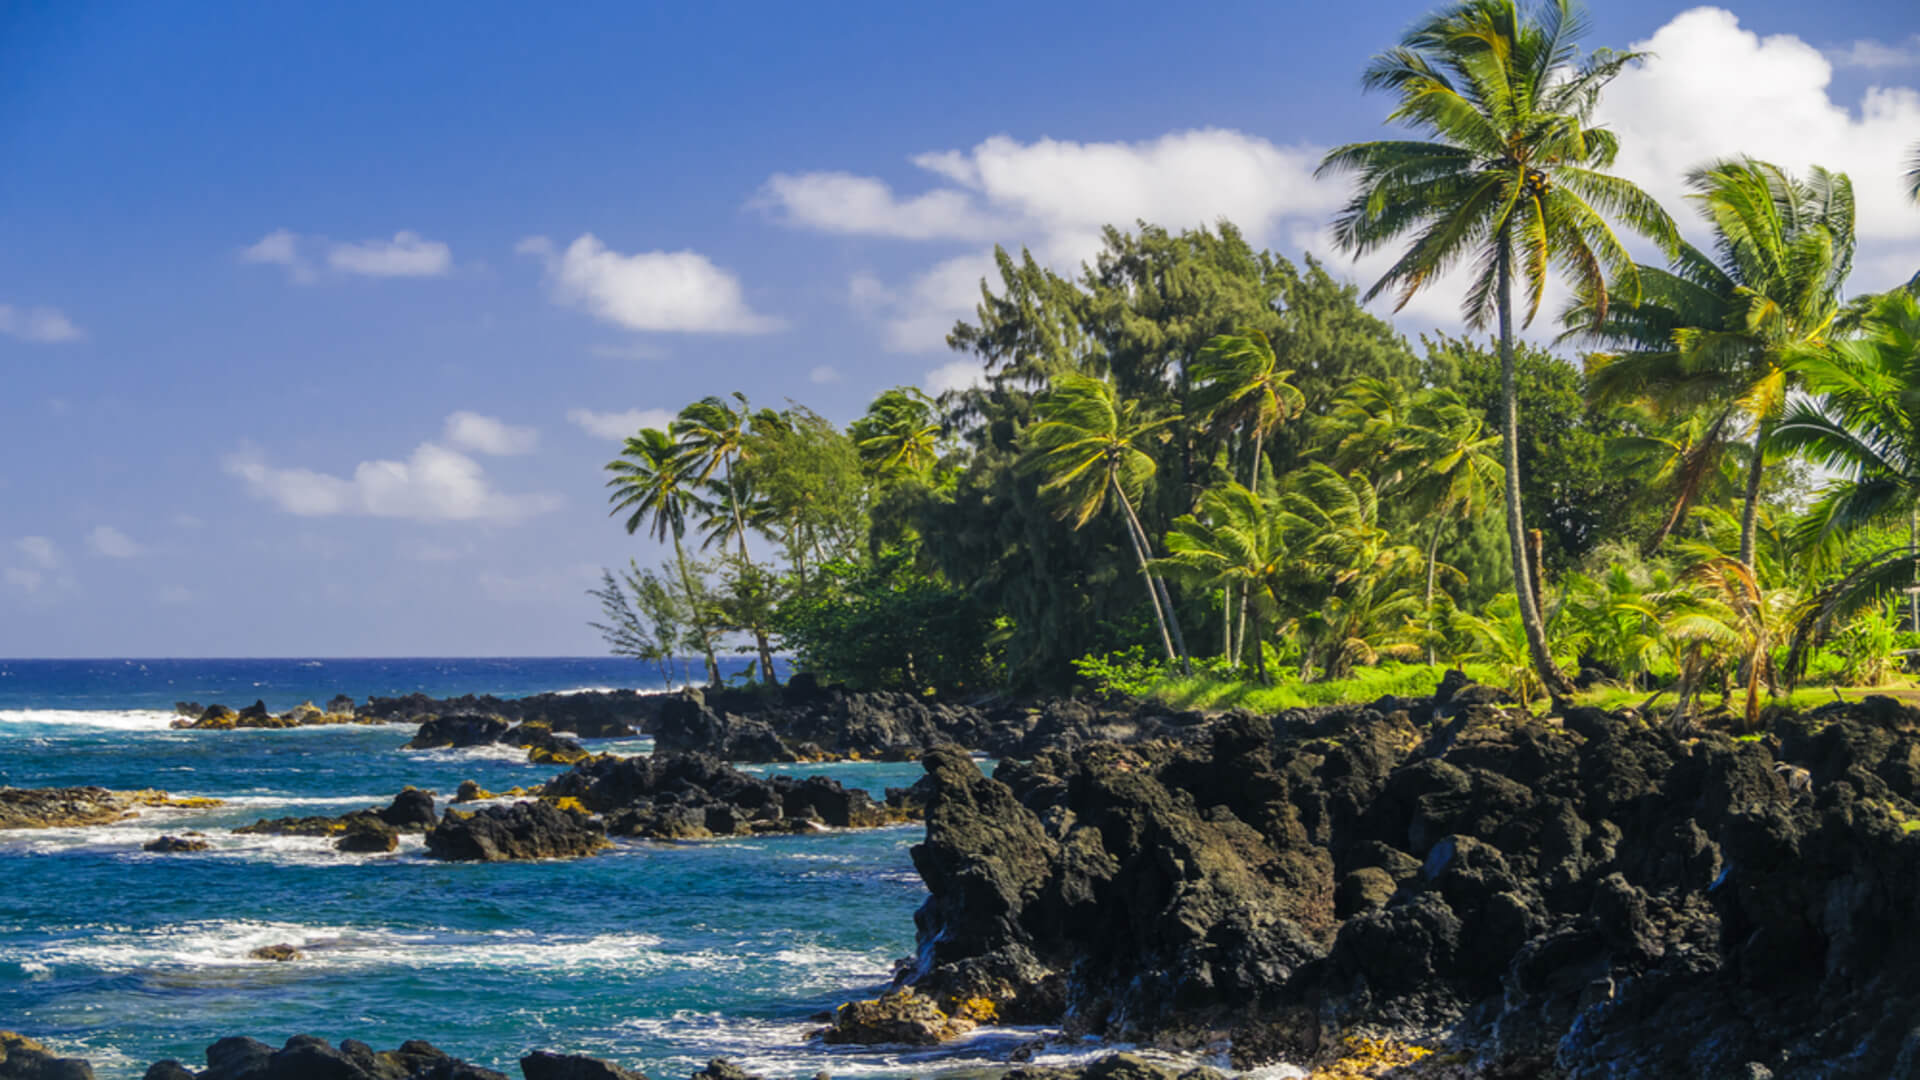 A beautiful picture of the Maui coastline